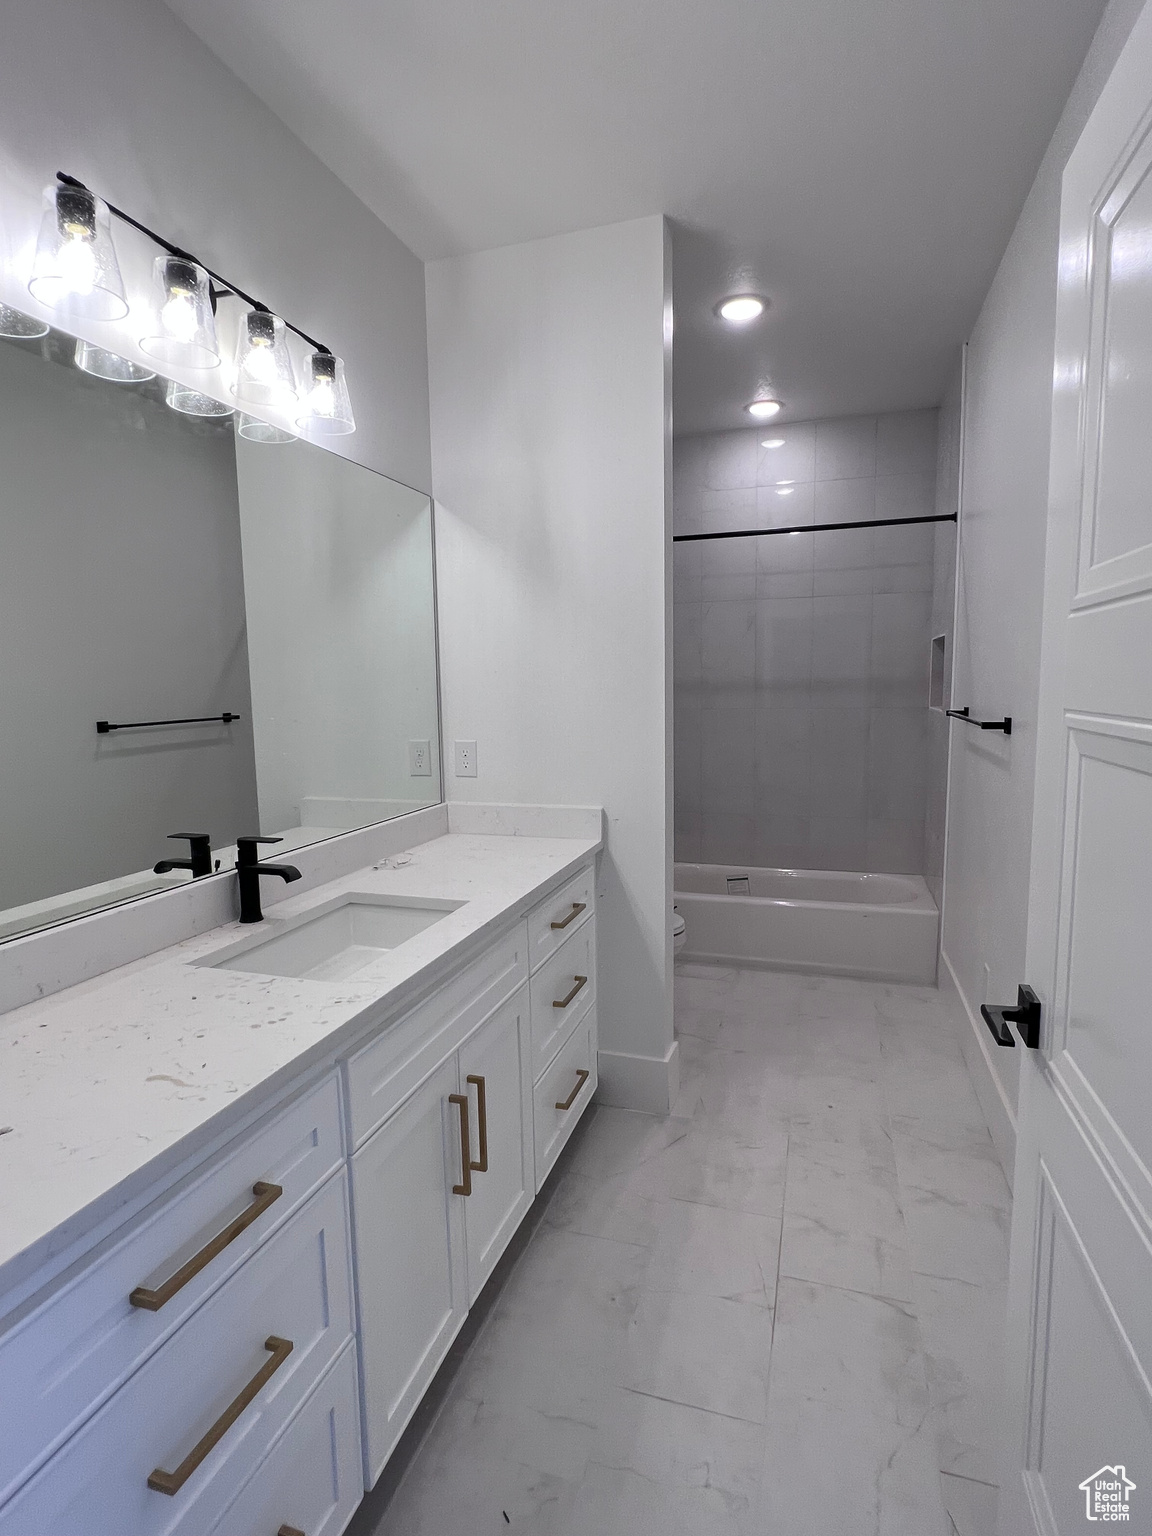 Full bathroom with toilet, tile flooring, tiled shower / bath combo, and vanity